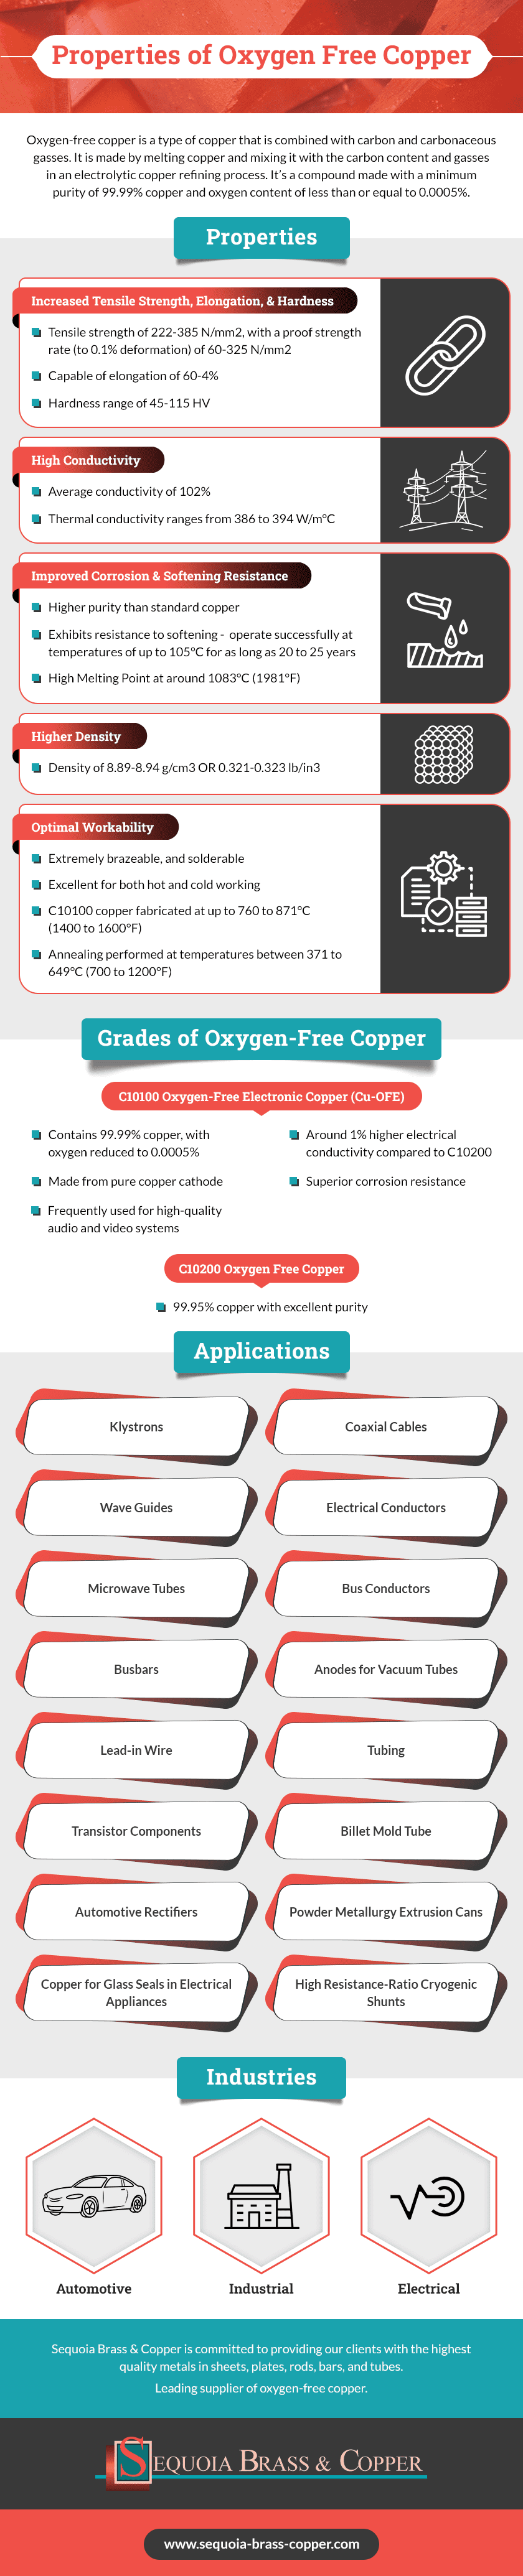 Properties of Oxygen Free Copper